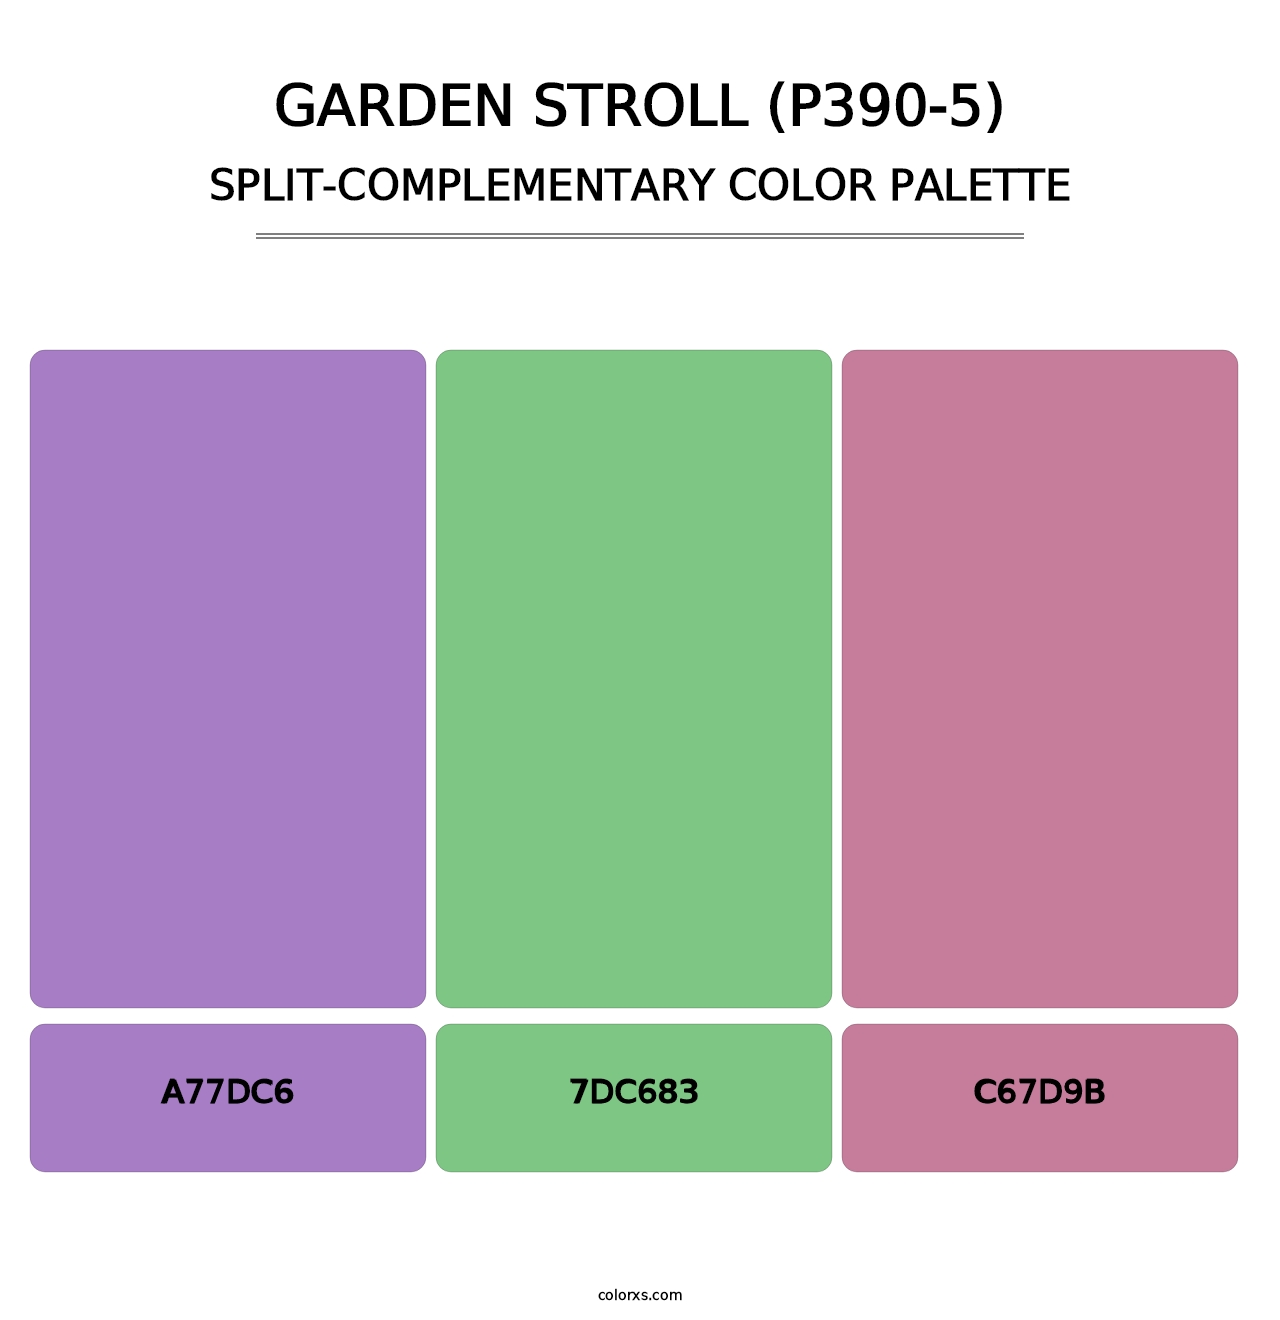 Garden Stroll (P390-5) - Split-Complementary Color Palette